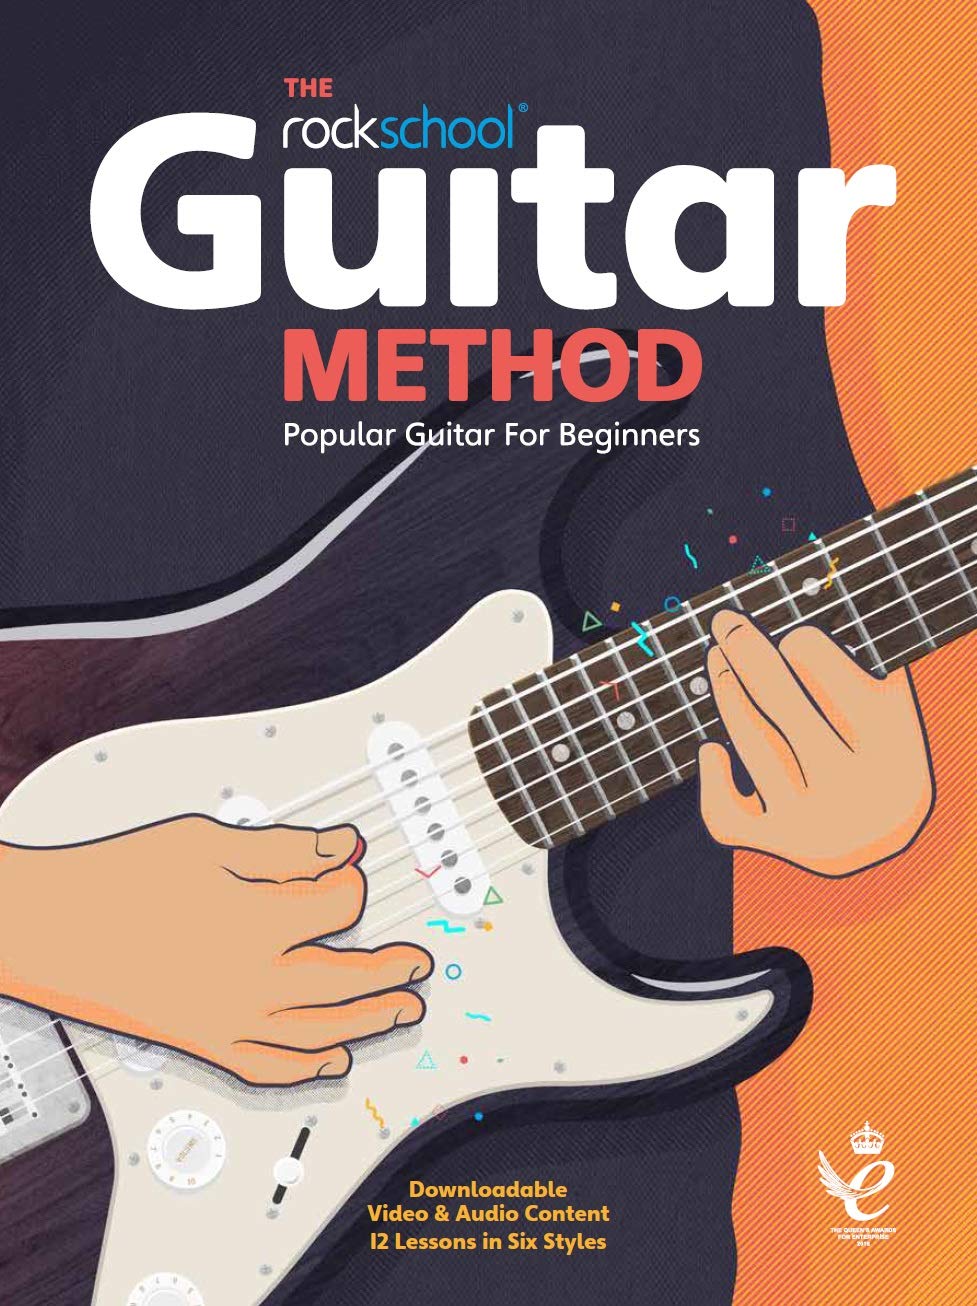 The Rockschool Guitar Method - Popular Guitar For Beginners